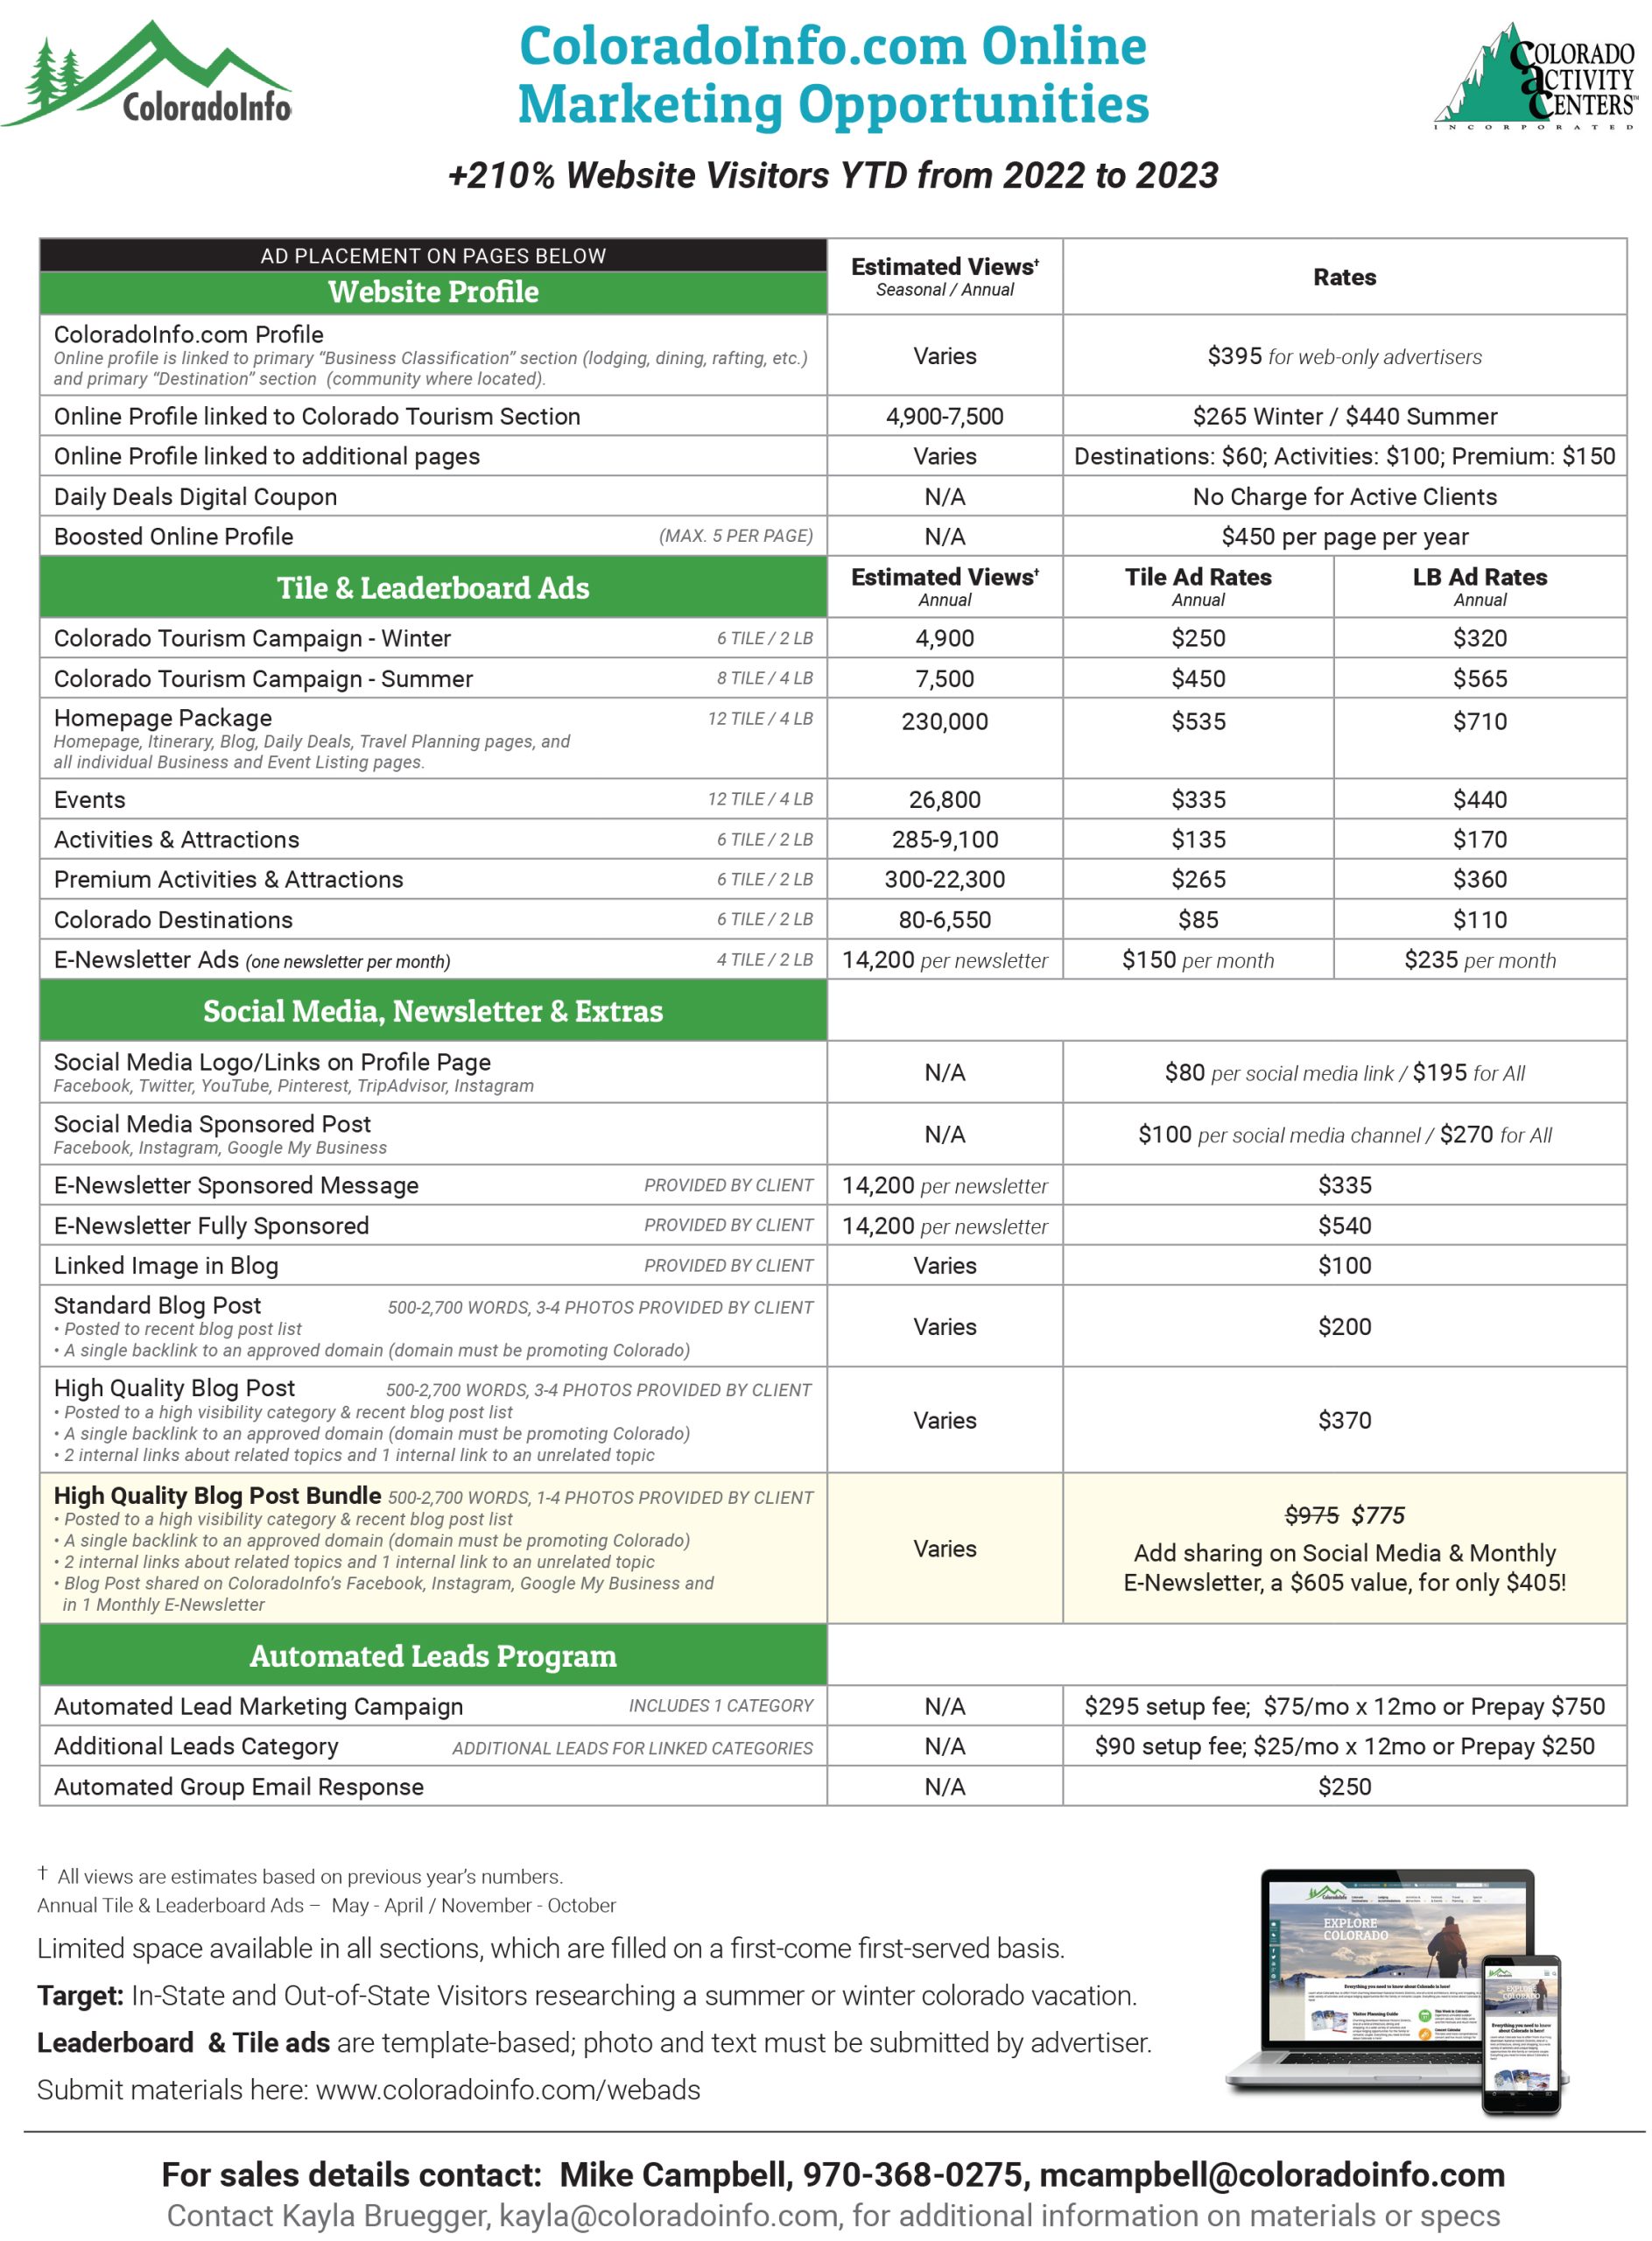 ColoradoInfo Marketing Rates Sheet